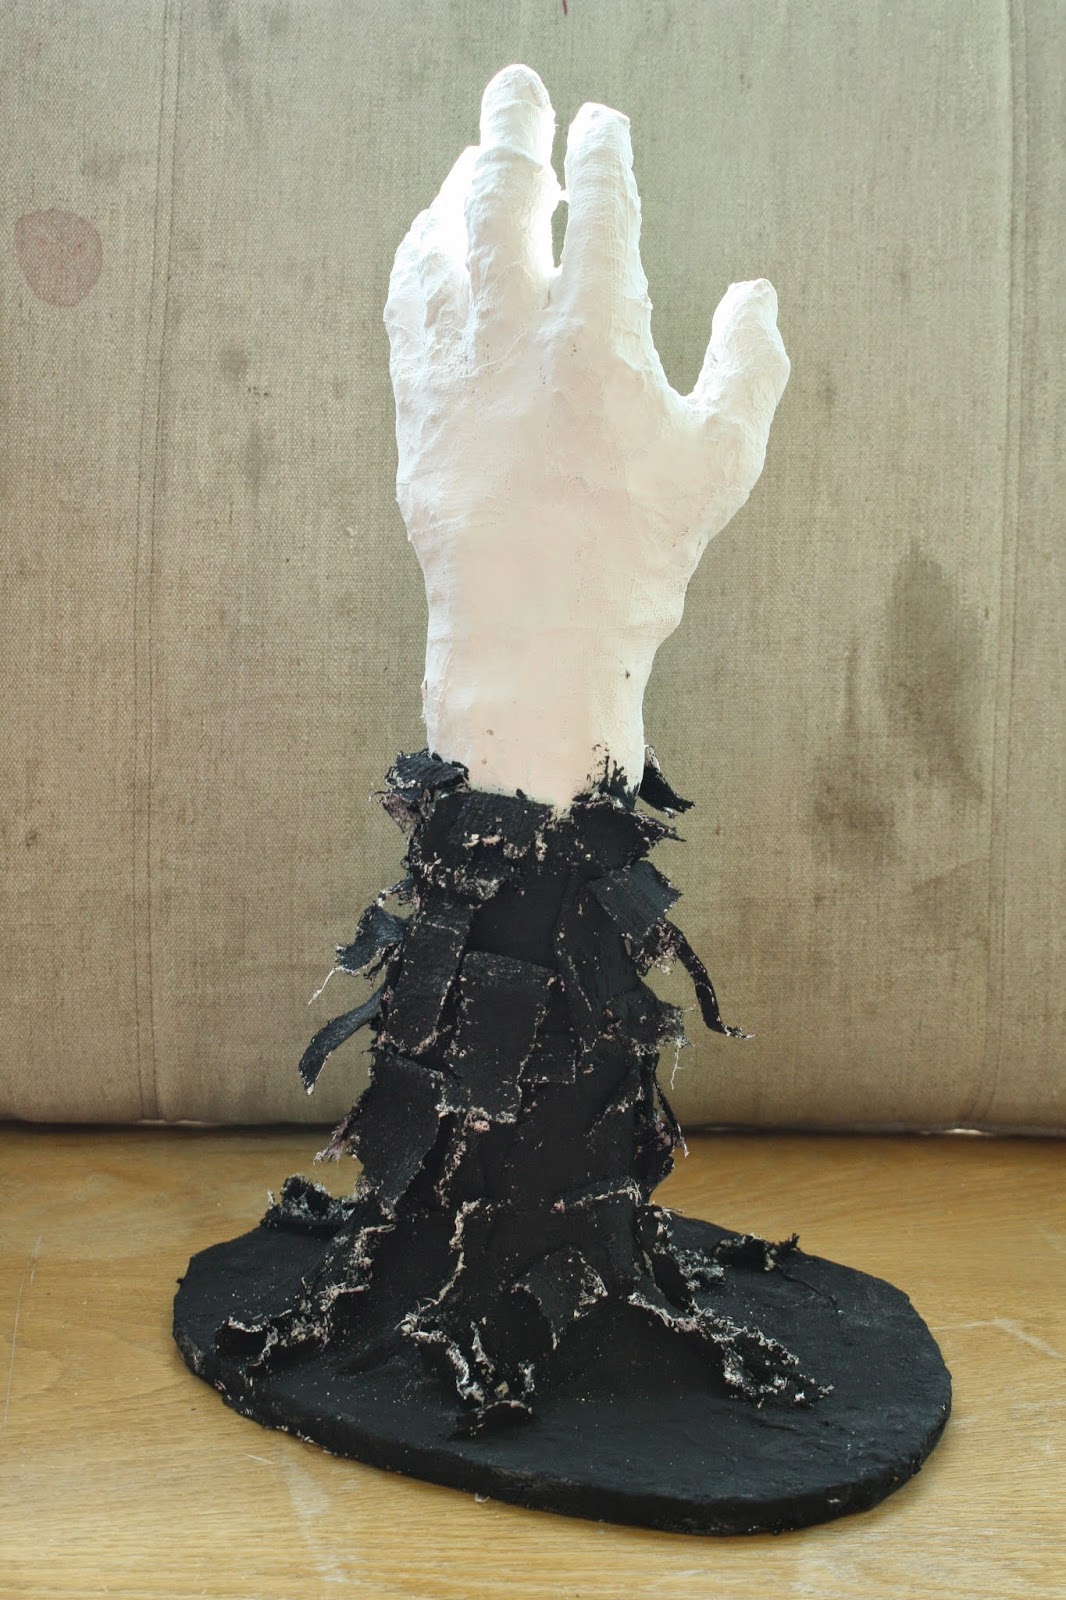 Tonns to do in ART!: Plaster Hand Sculpture